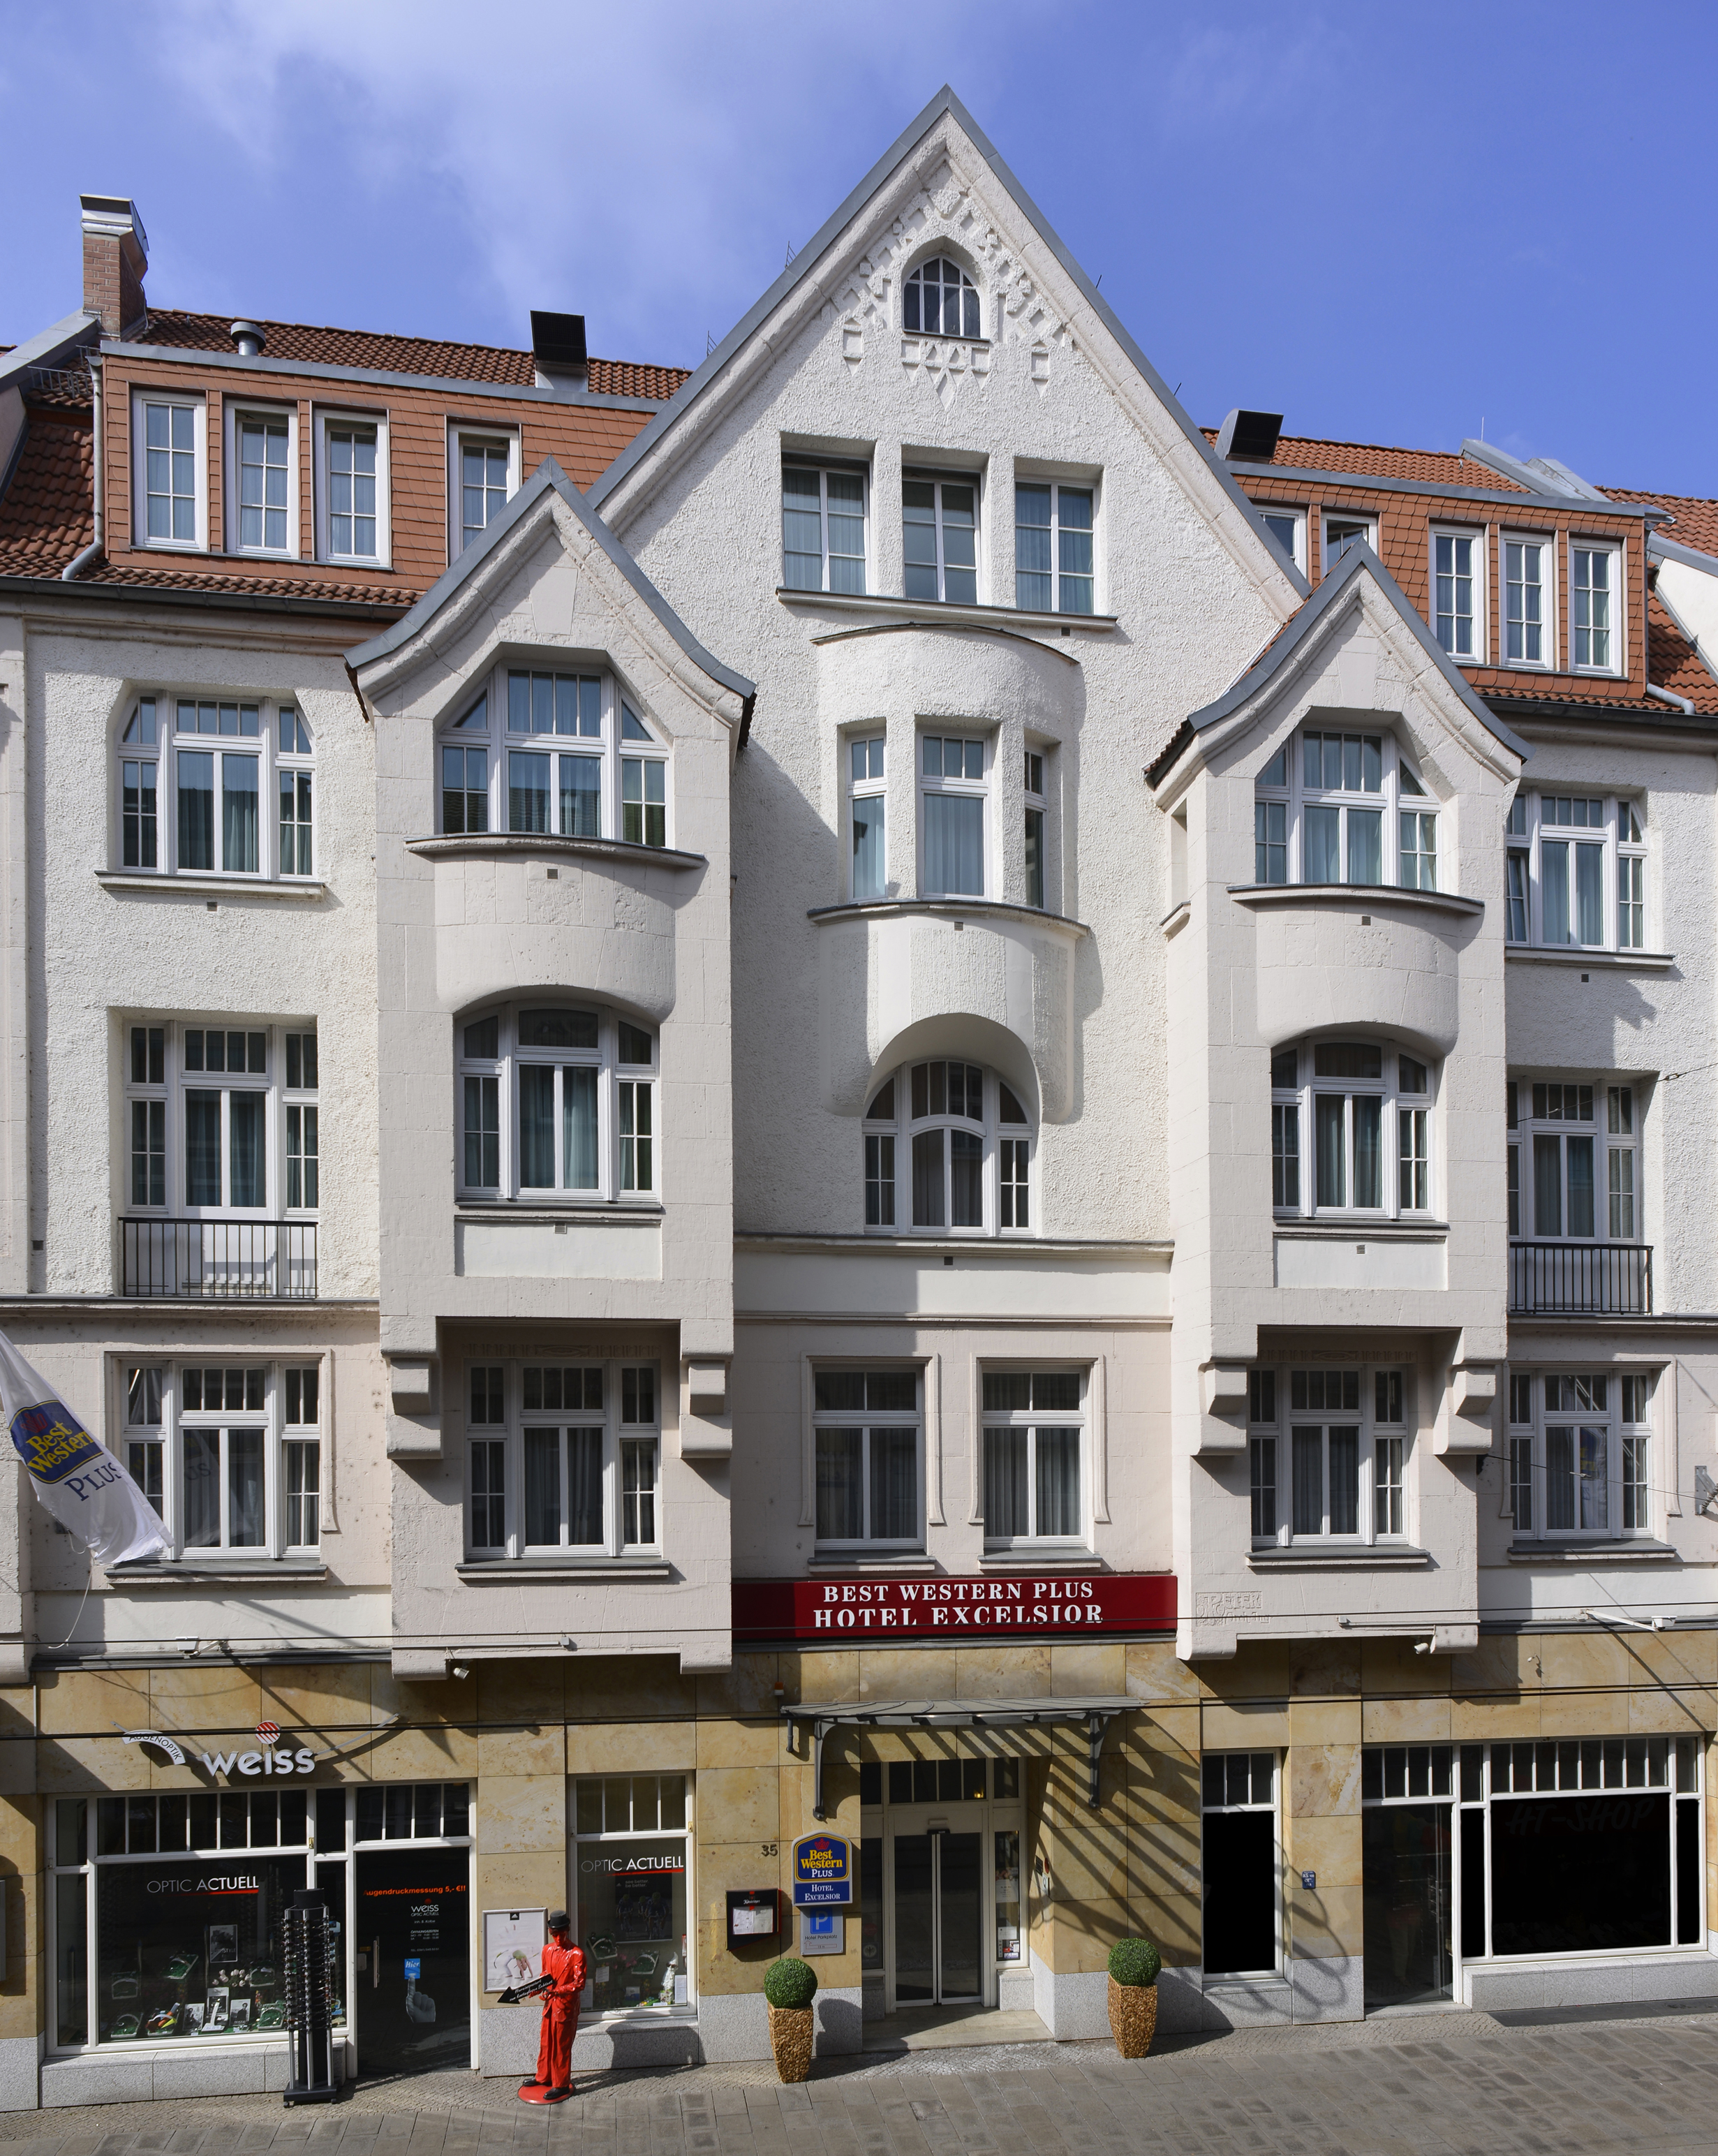 Das Best Western Plus Hotel Excelsior in Erfurt.
